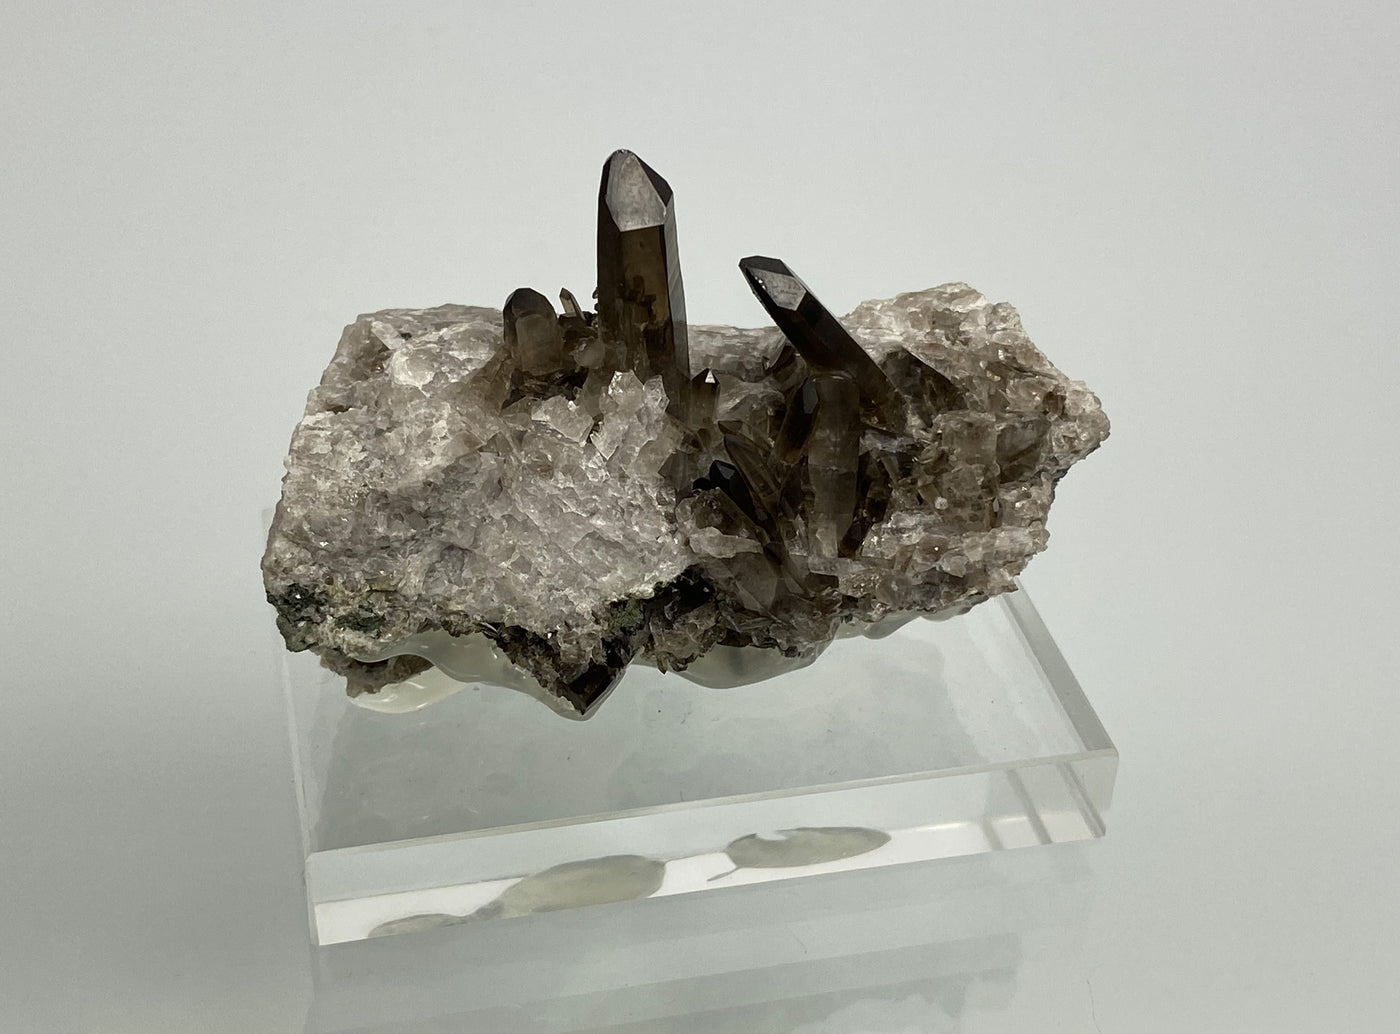 Smoky quartz, Scharrn, Hollersbachtal, Salzburg, Austria